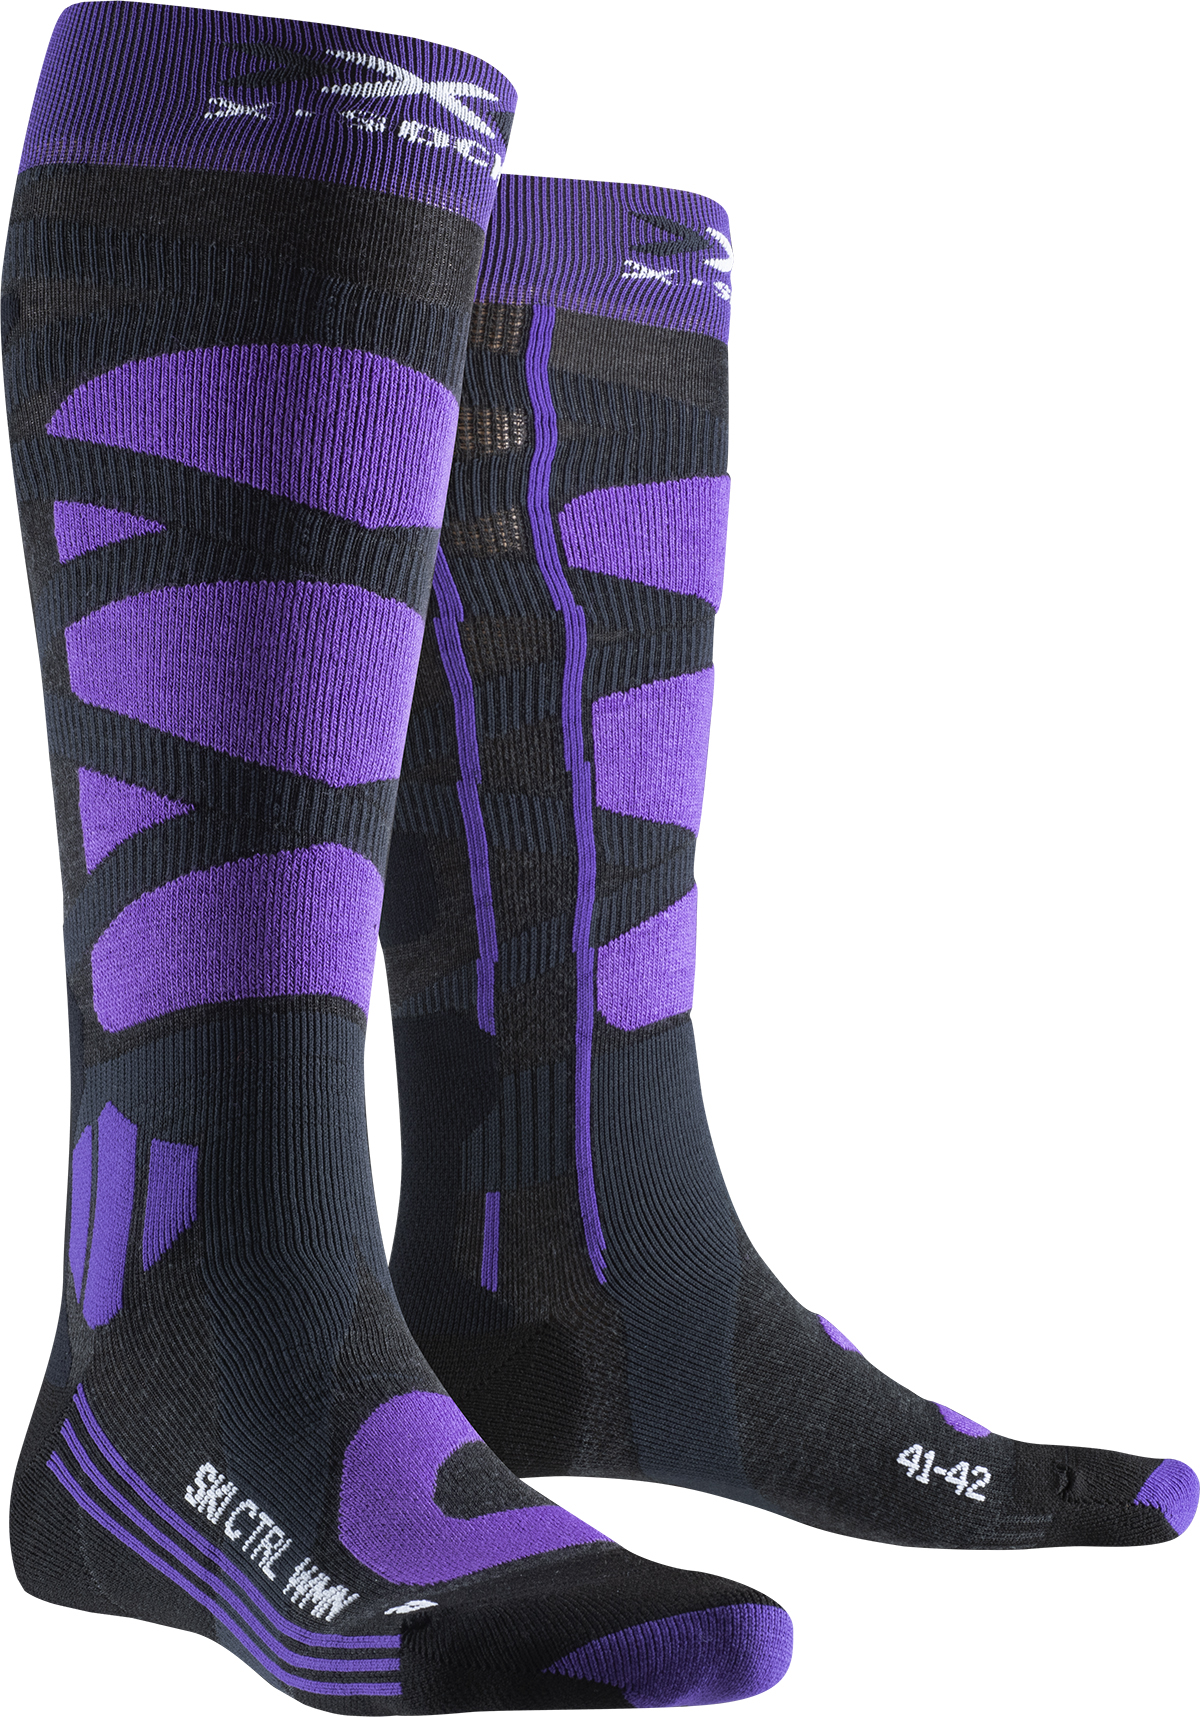 Цена полиэстеровые носки X-Socks Ski Control 4.0 Charcoal Melange/Purple (39-40) в Киеве